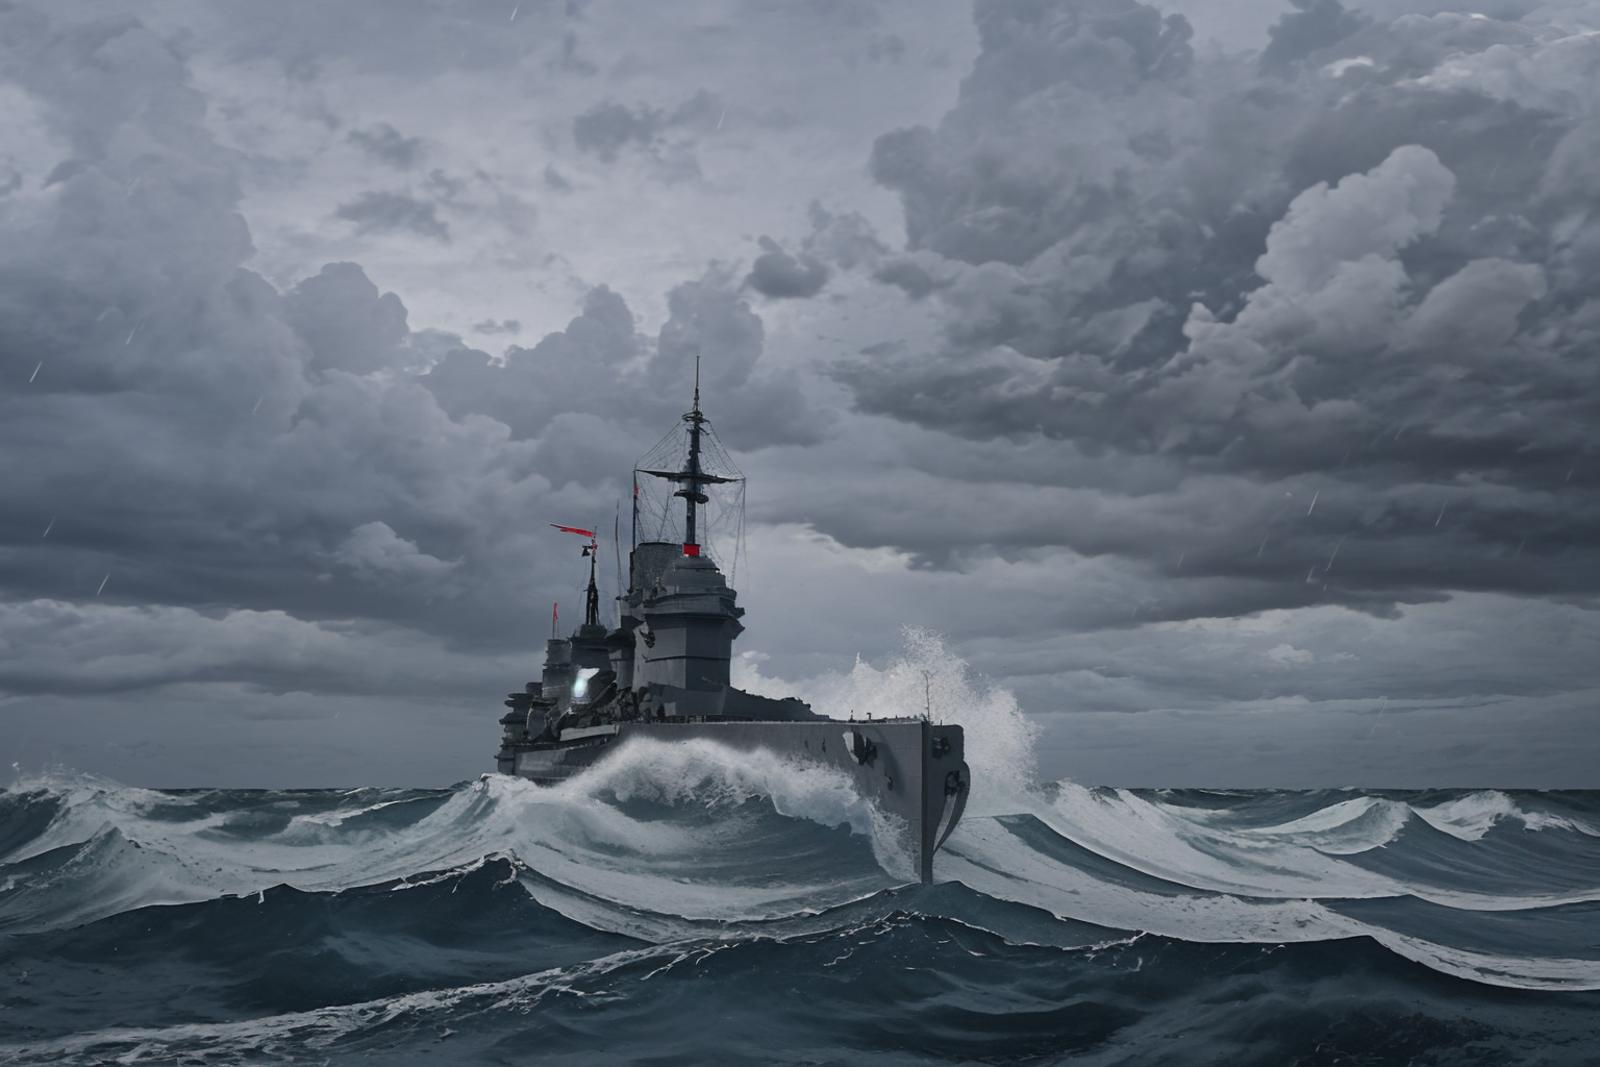 HMS Warspite Battleship image by dbst17